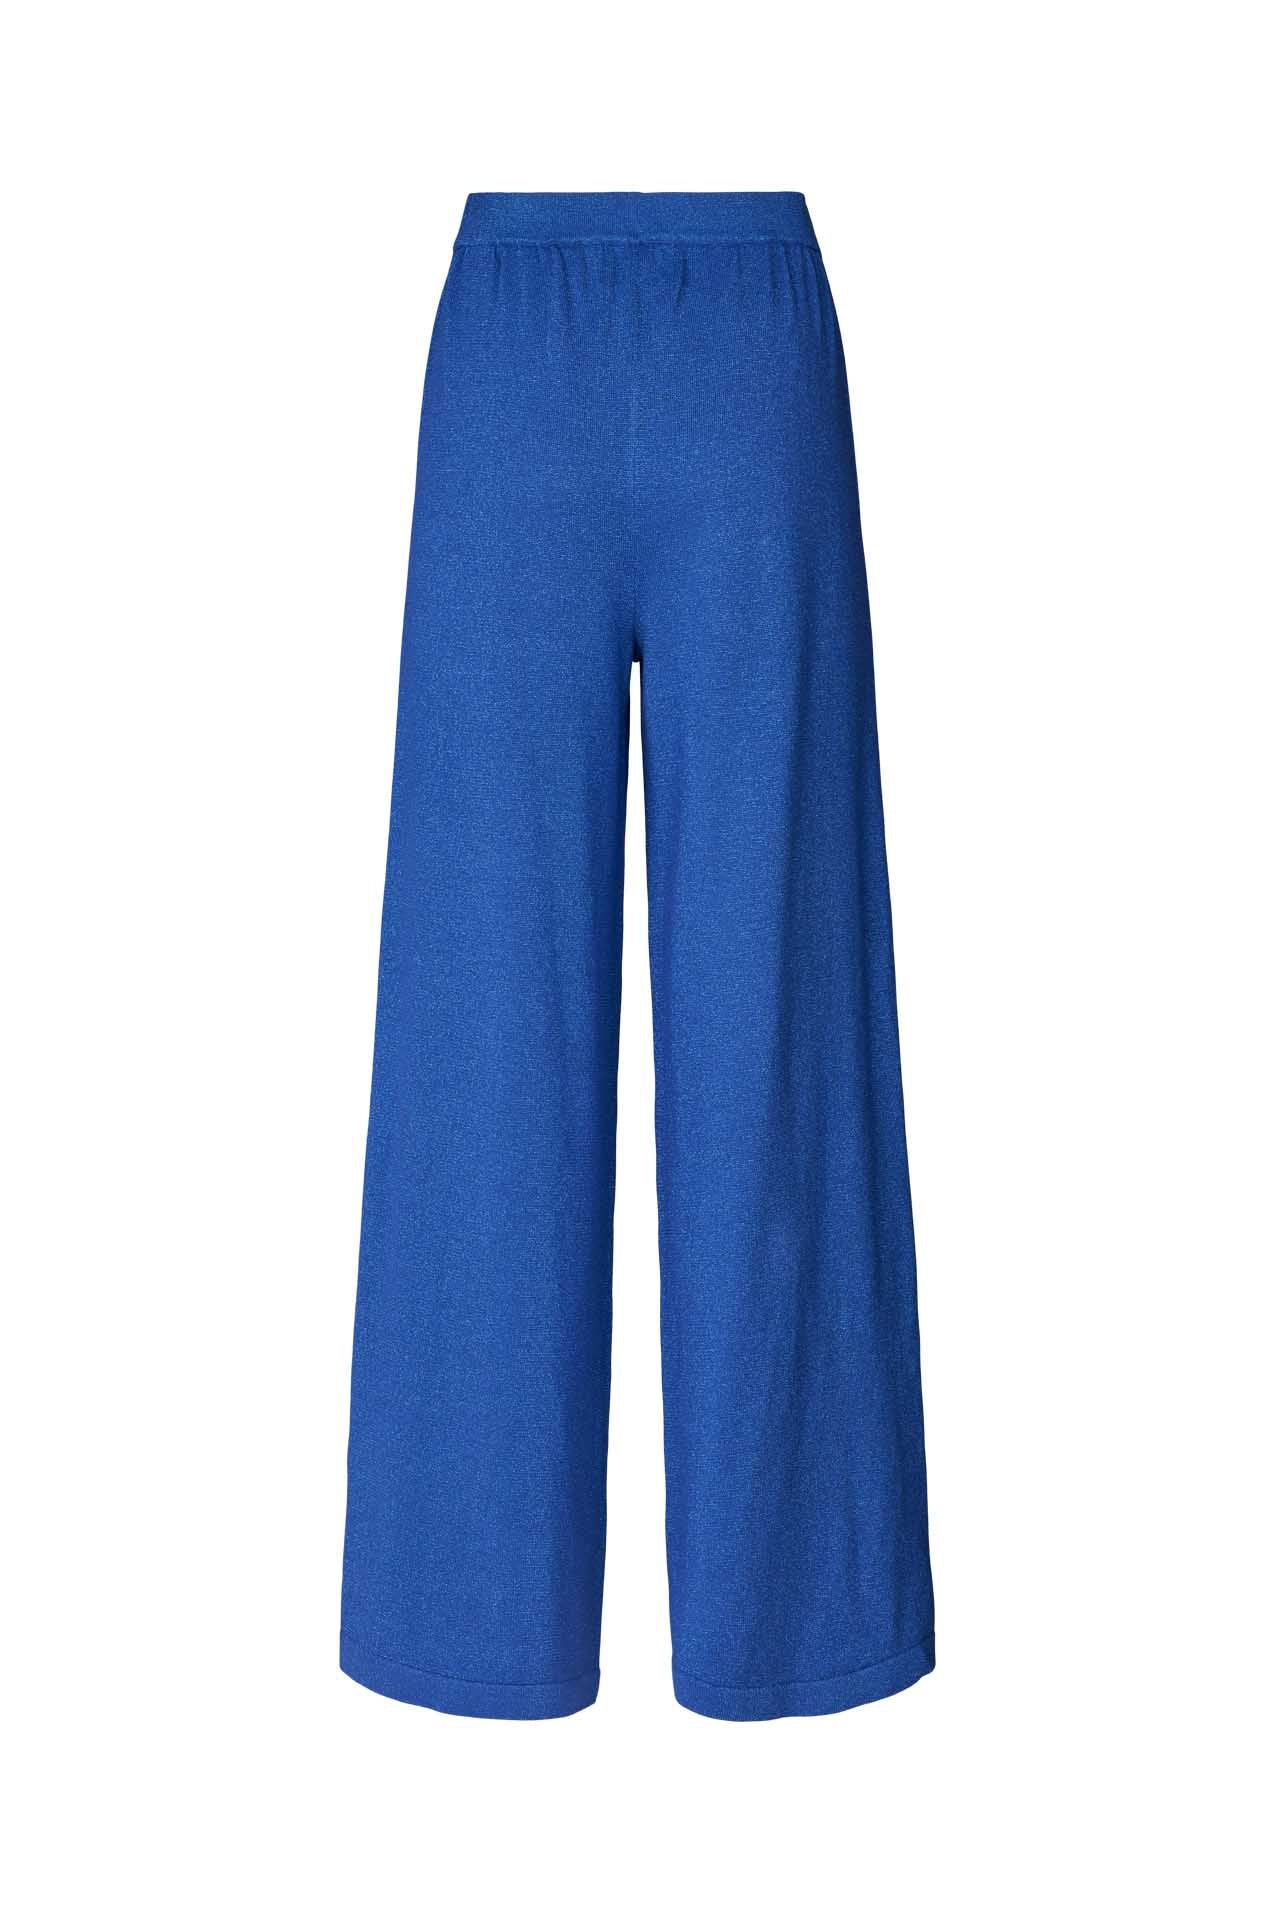 Lollys Laundry Agadir Pants - Neon Blue